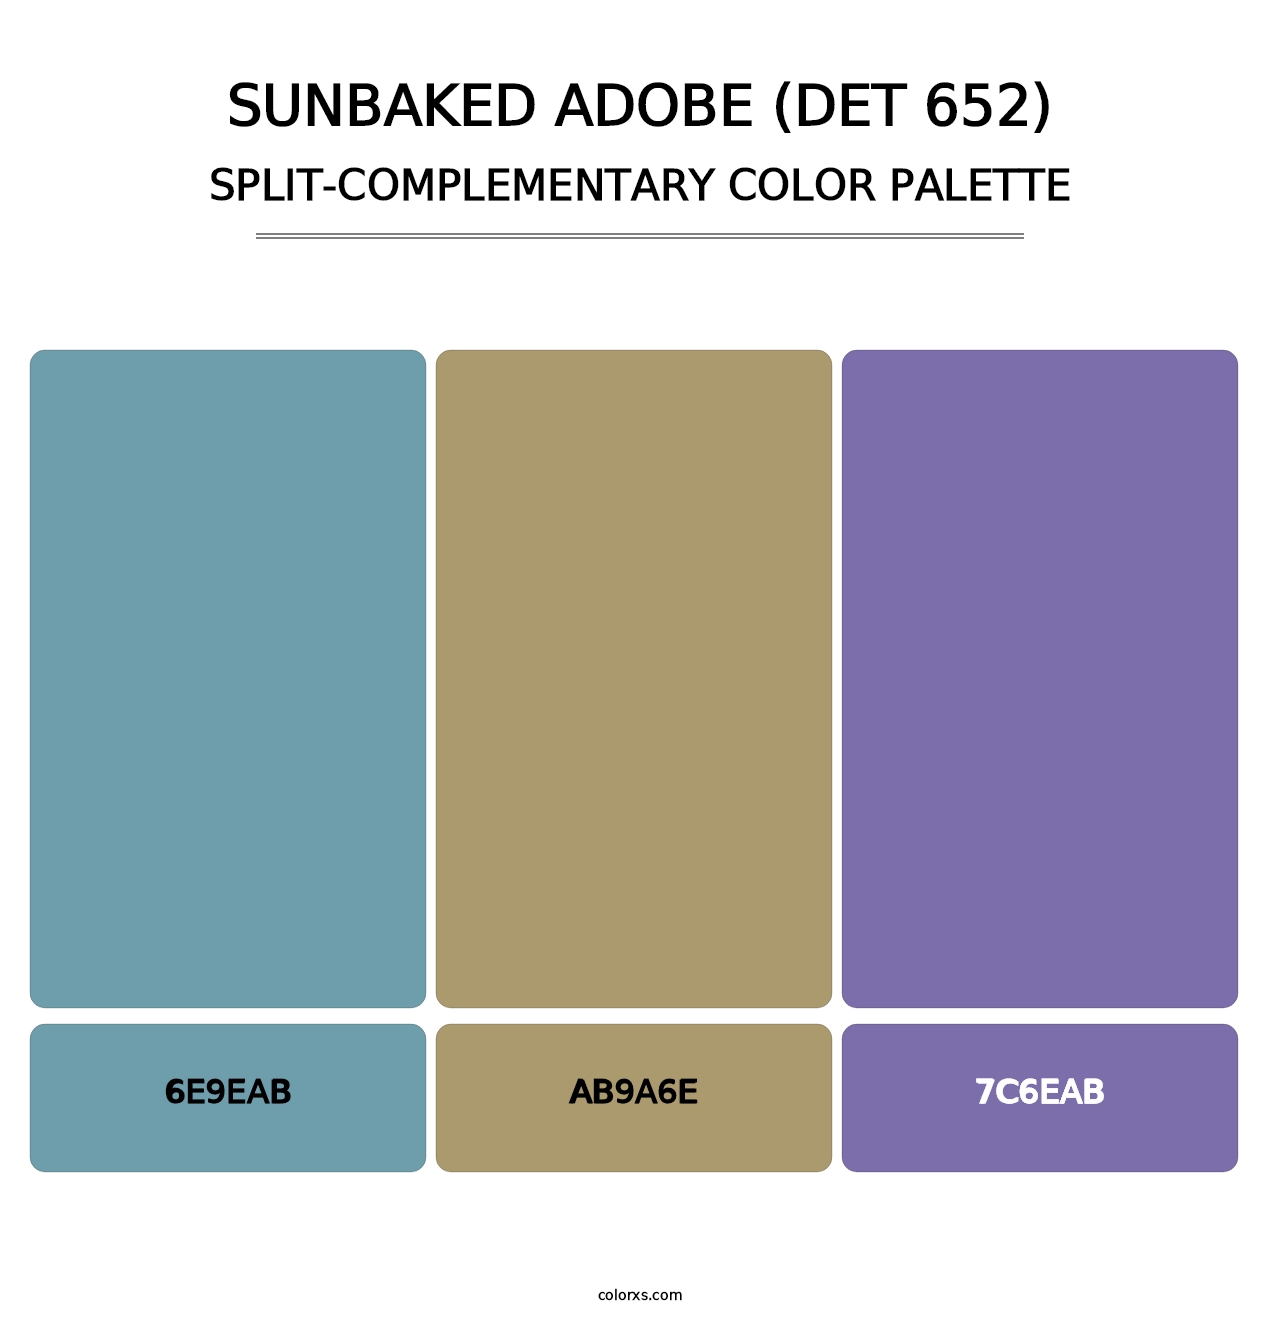 Sunbaked Adobe (DET 652) - Split-Complementary Color Palette